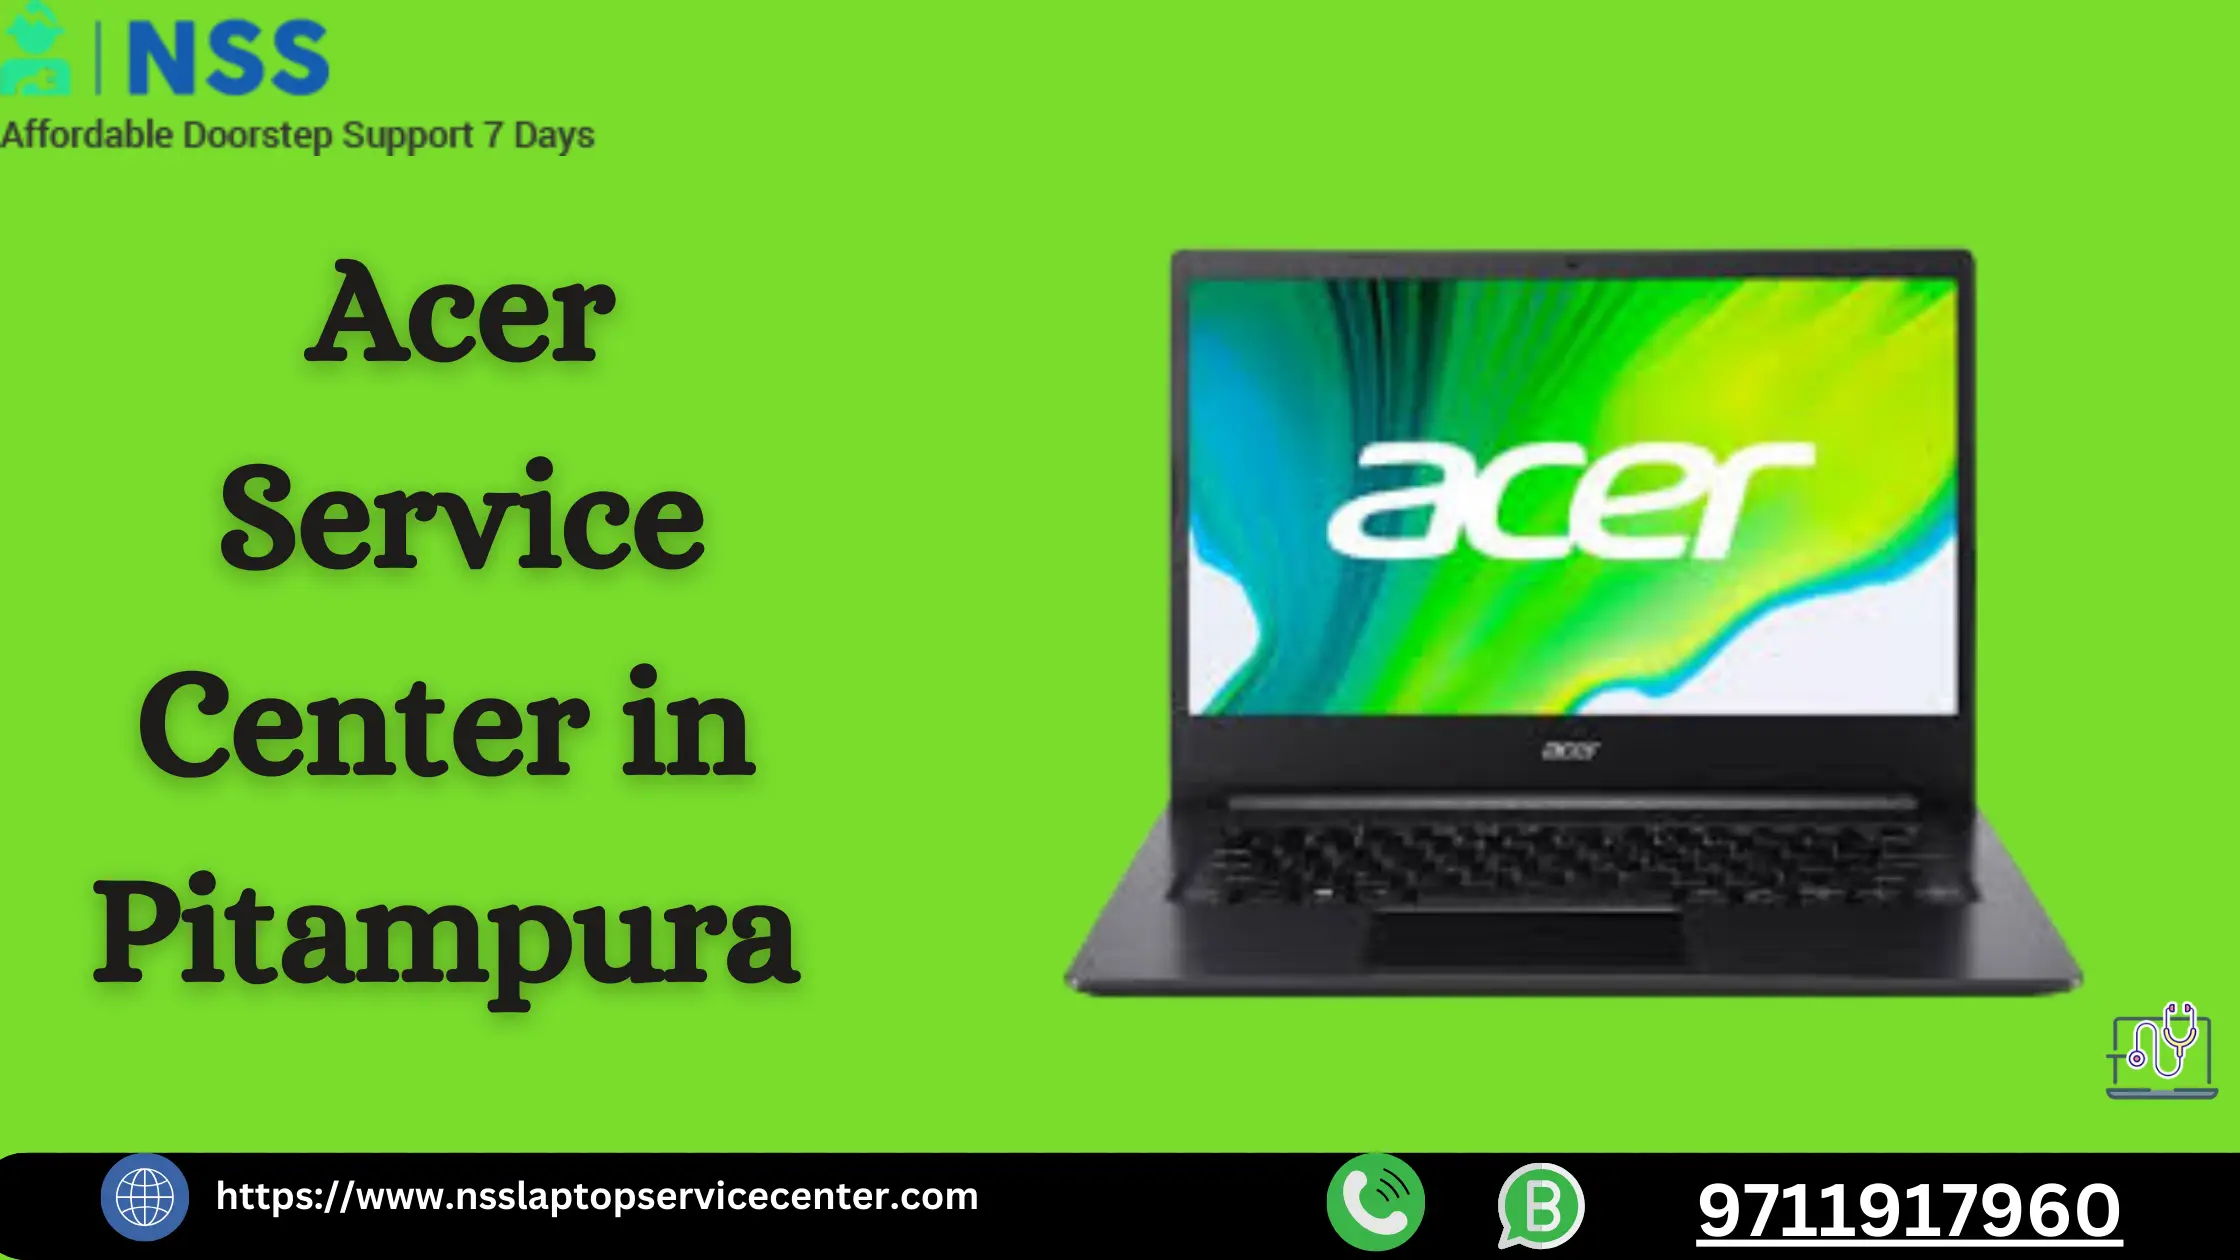 Acer Laptop Service Center in Pitampura Near Delhi